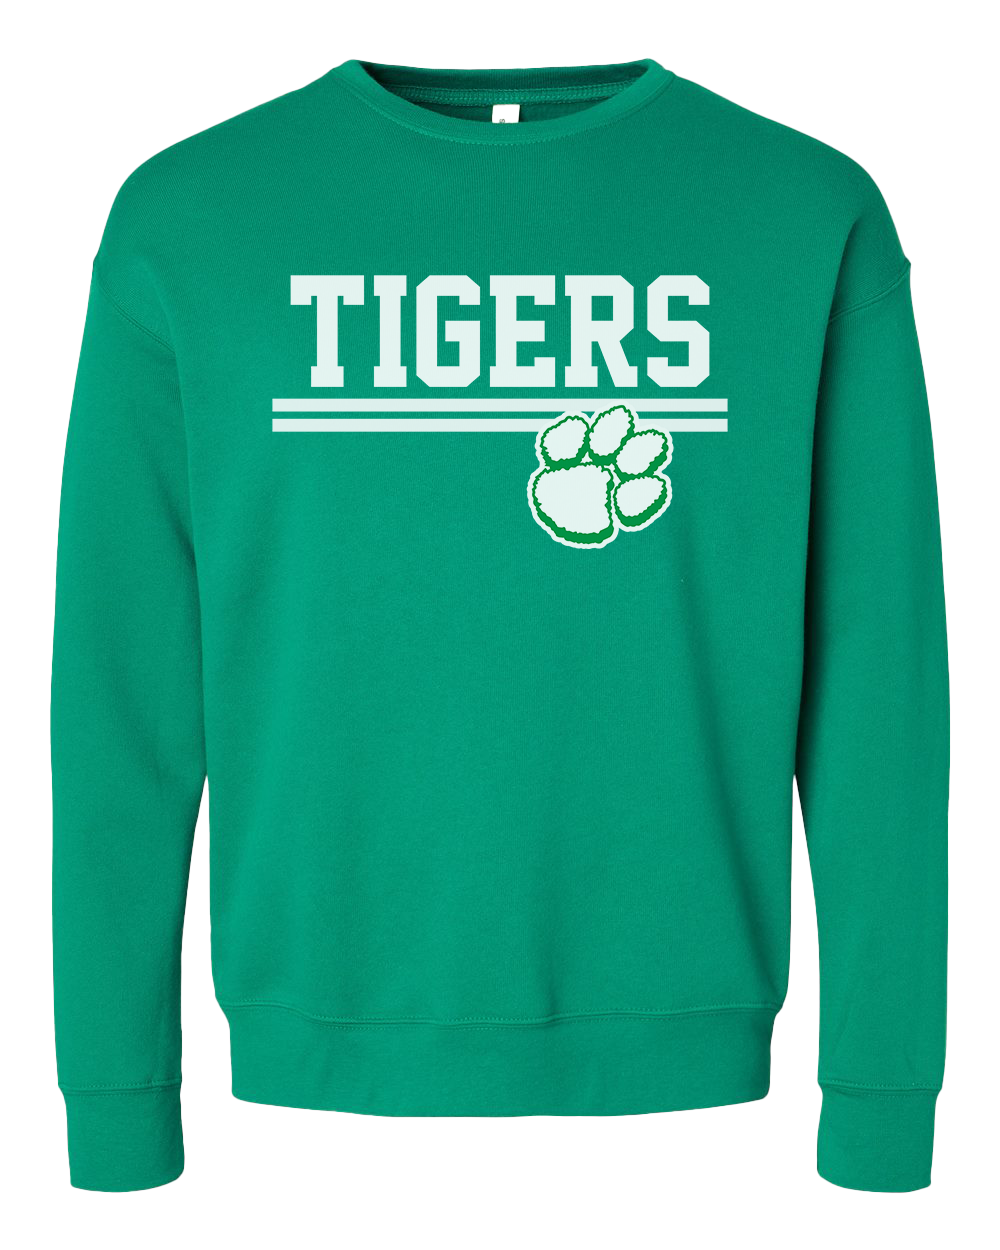 Yorktown Tigers Vintage Crew Sweatshirt - Kelly Green